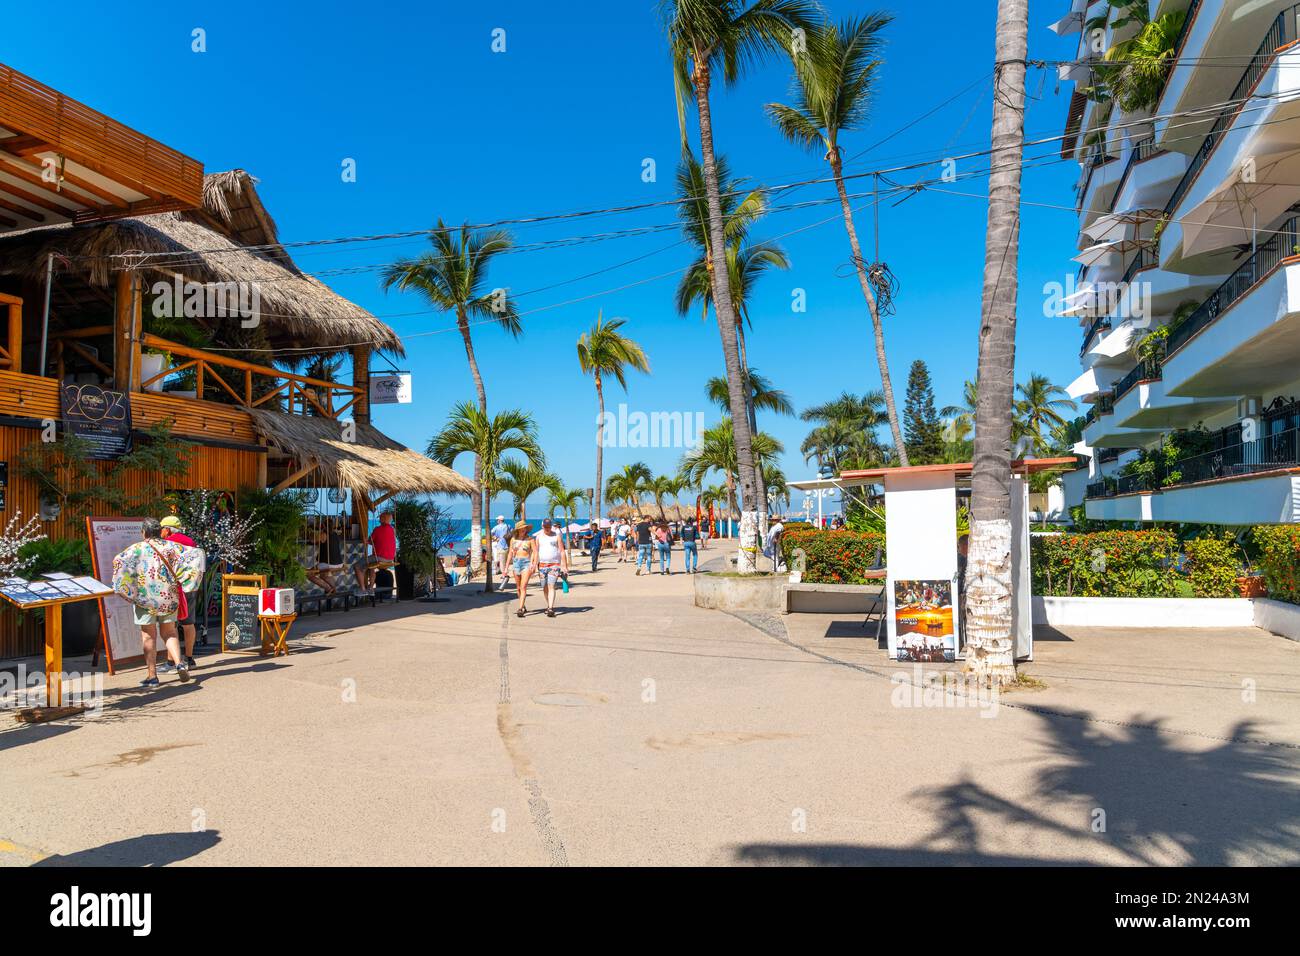 Shops, cafes, hotels and souvenir booths at the seaside promenade at Los Muertos Olas Altas beach in touristic Romantic Zone, Puerto Vallarta Mexico. Stock Photo